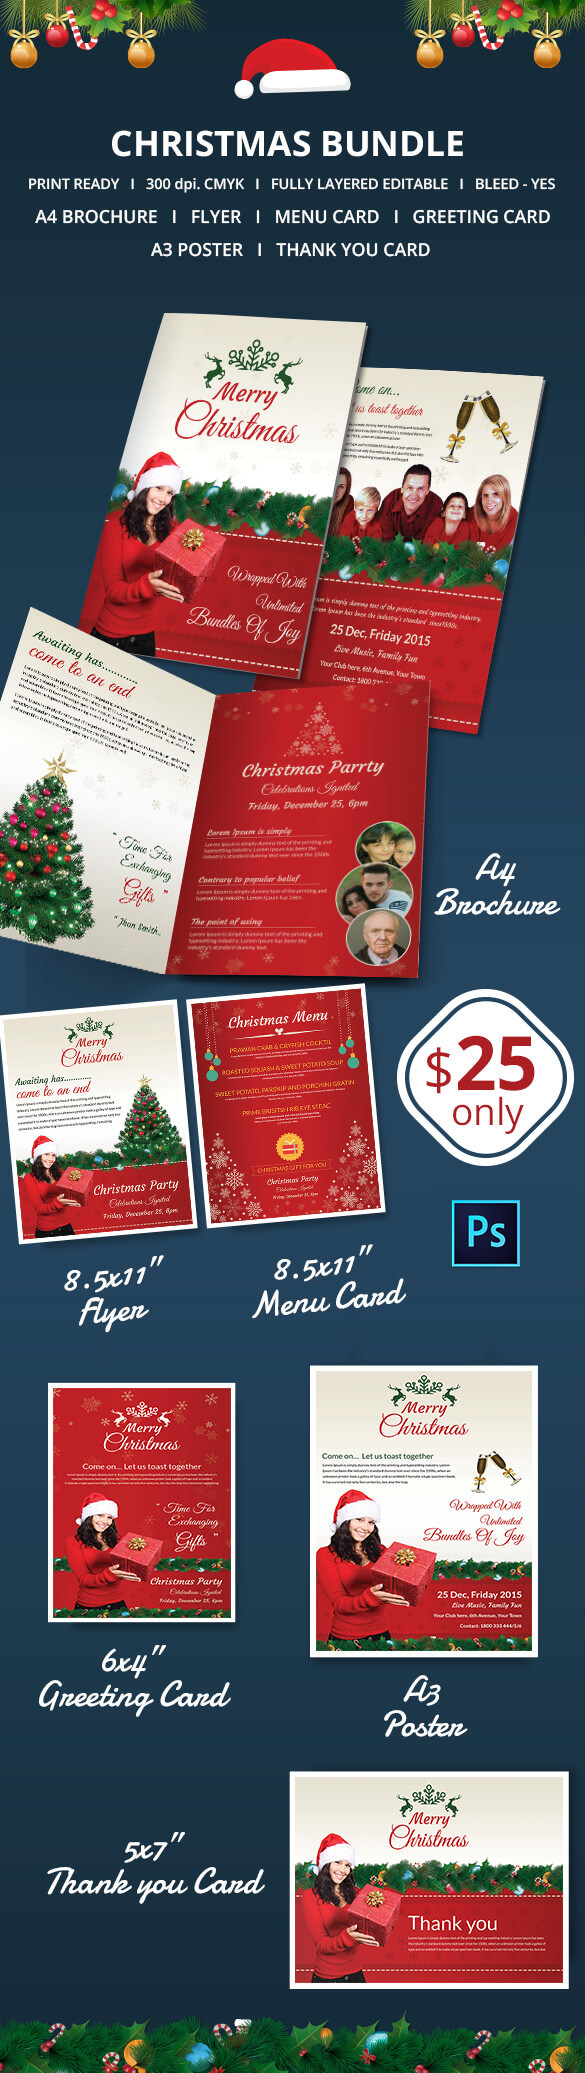 41+ Christmas Brochures Templates - Psd, Word, Publisher Throughout Christmas Brochure Templates Free